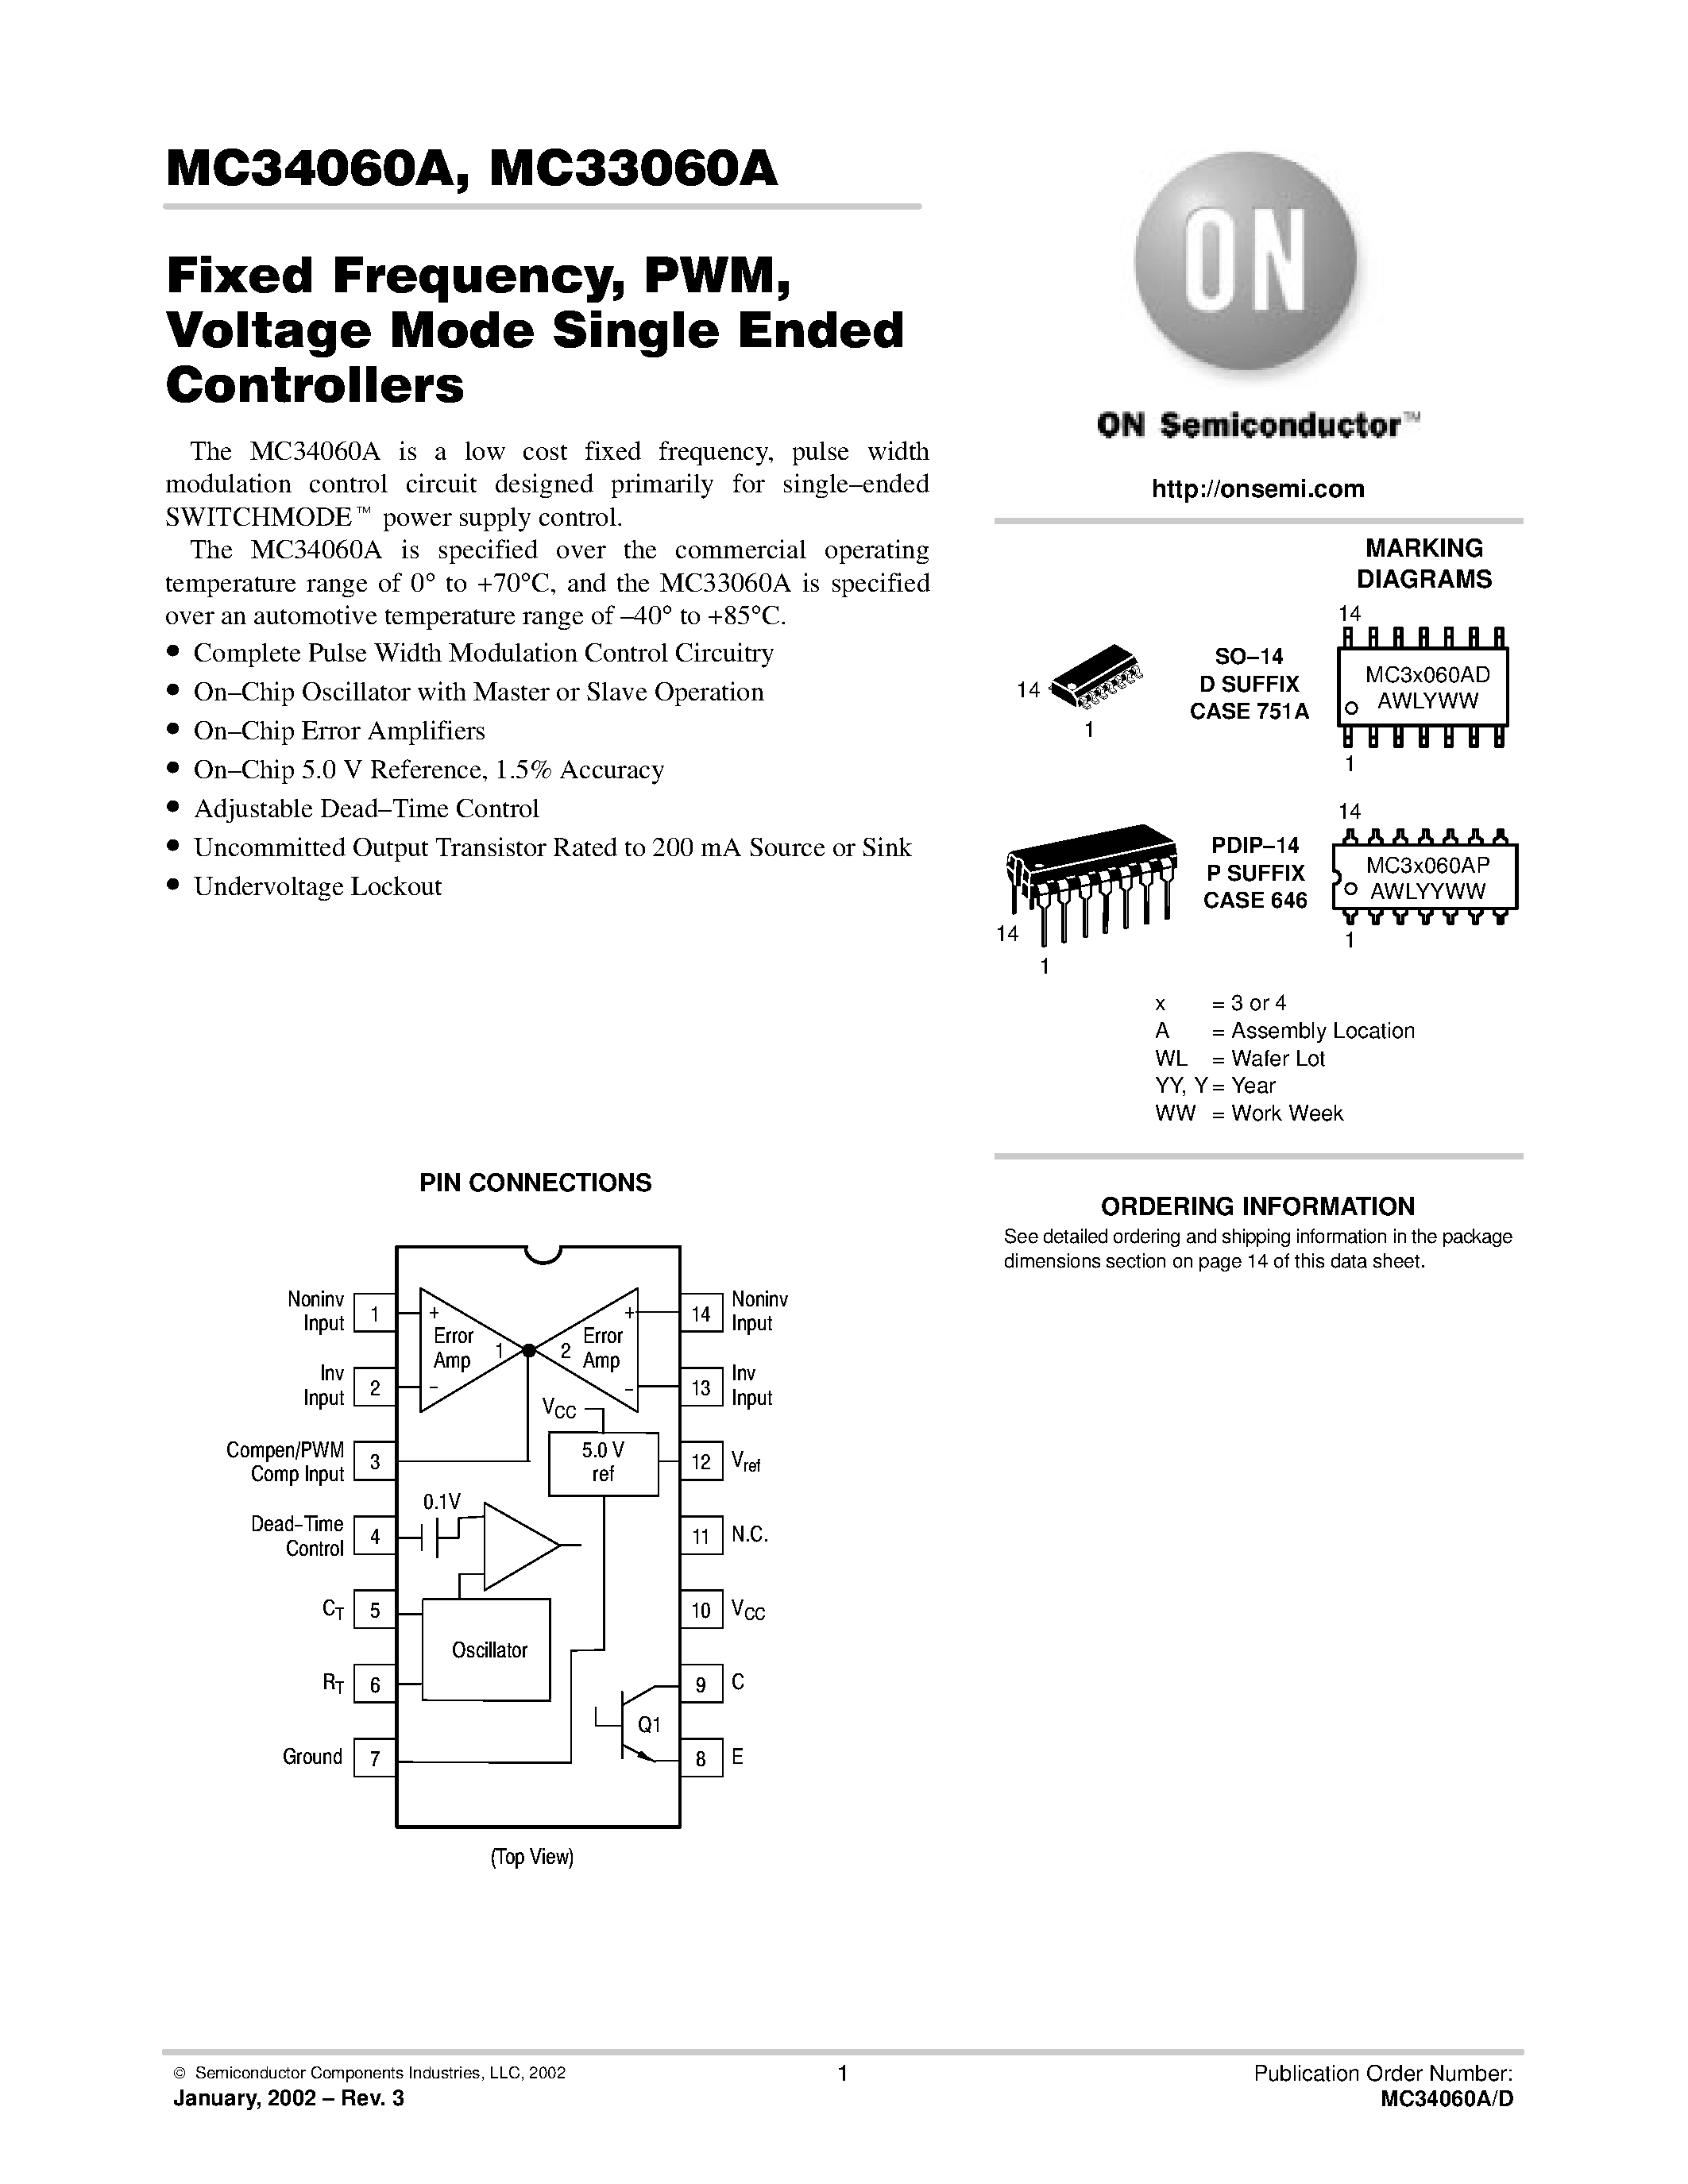 Datasheet MC33060A - (MC33060A / MC34060A) PRECISION SWITCHMODE PULSE WIDTH MODULATOR CONTROL CIRCUIT page 1